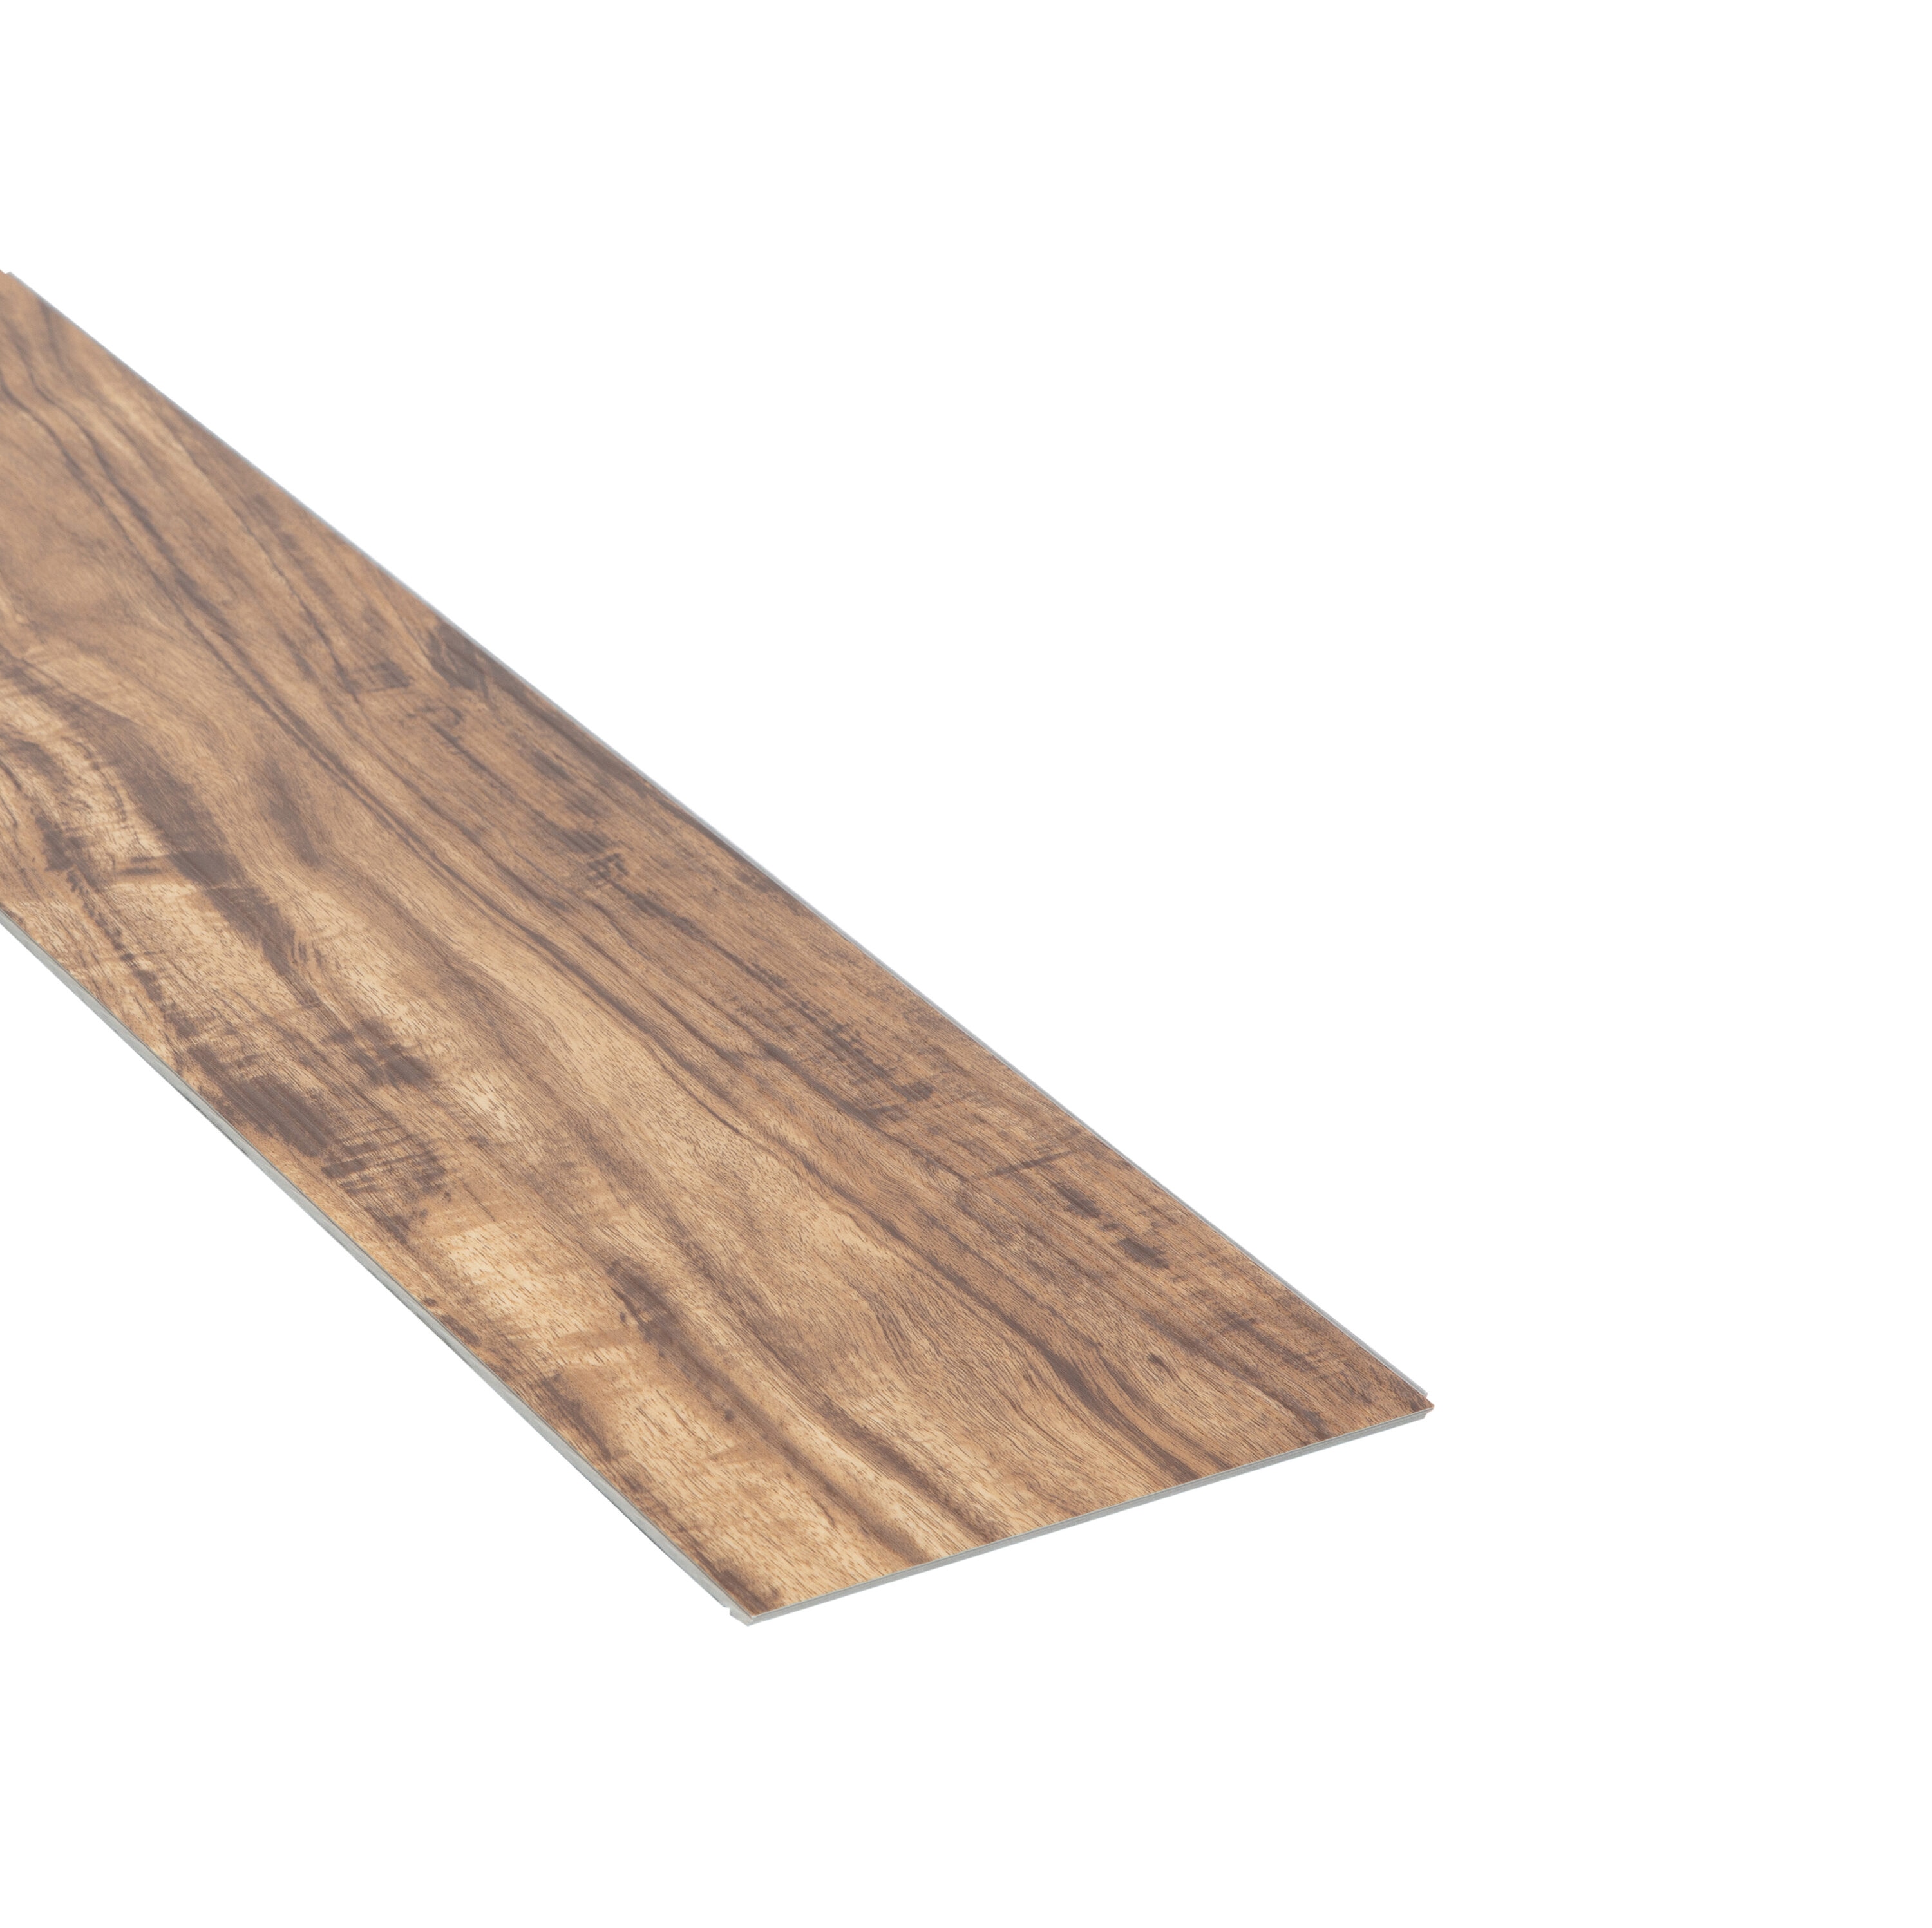 Nouveax Spiced Acacia 4-mm x 5-29/32-in W x 48-in L Waterproof Interlocking Luxury Vinyl Plank Flooring (19.69-sq ft/case) in the Vinyl Plank department